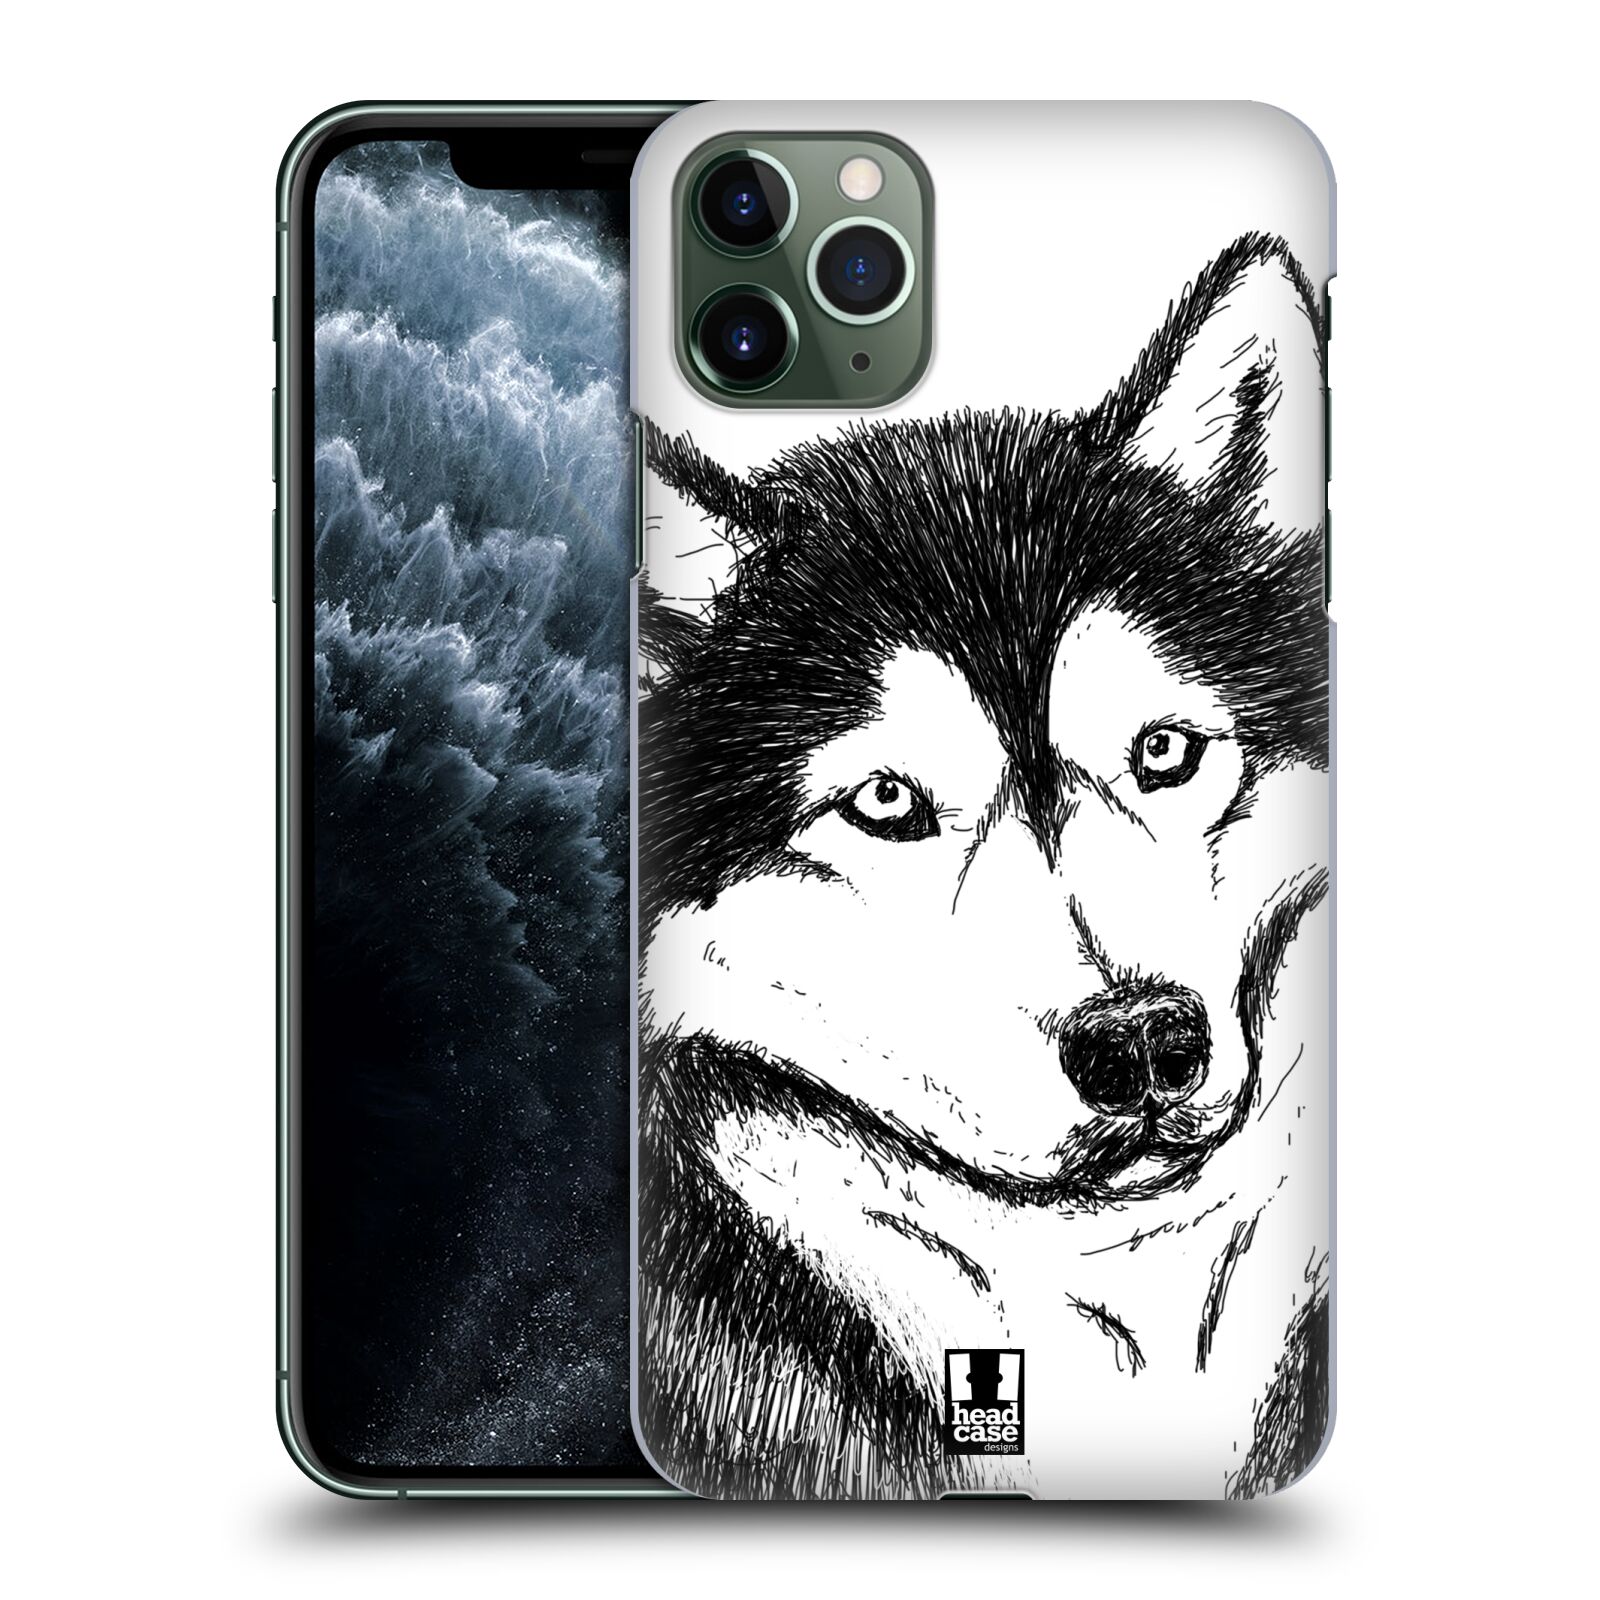 Pouzdro na mobil Apple Iphone 11 PRO MAX - HEAD CASE - vzor Kreslená zvířátka černá a bílá pes husky